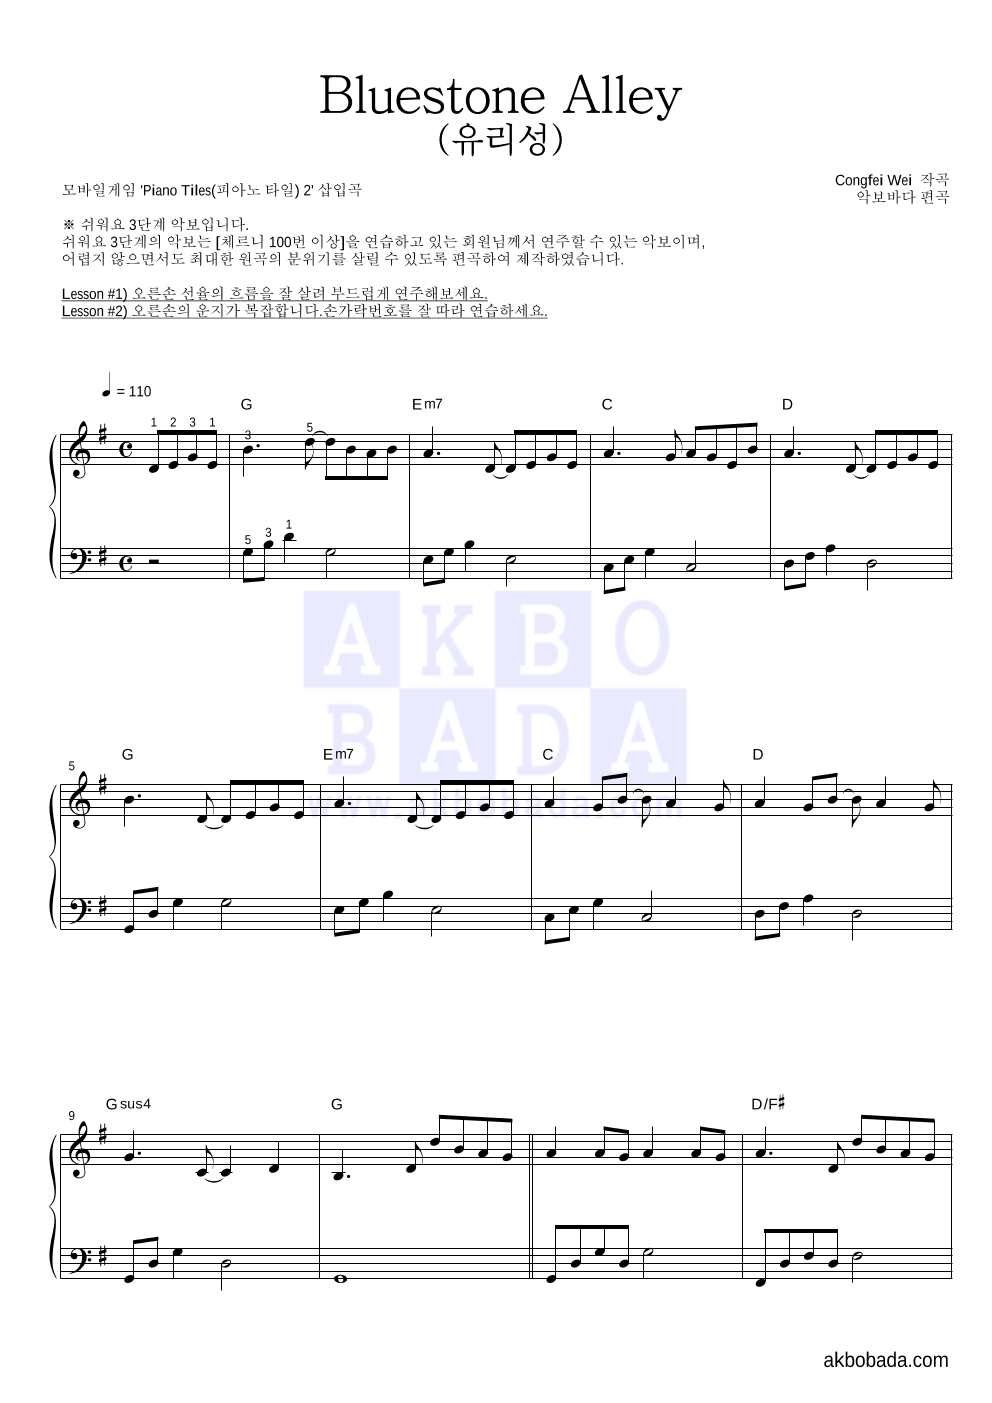 Congfei Wei - Bluestone Alley (유리성) 피아노2단-쉬워요 악보 